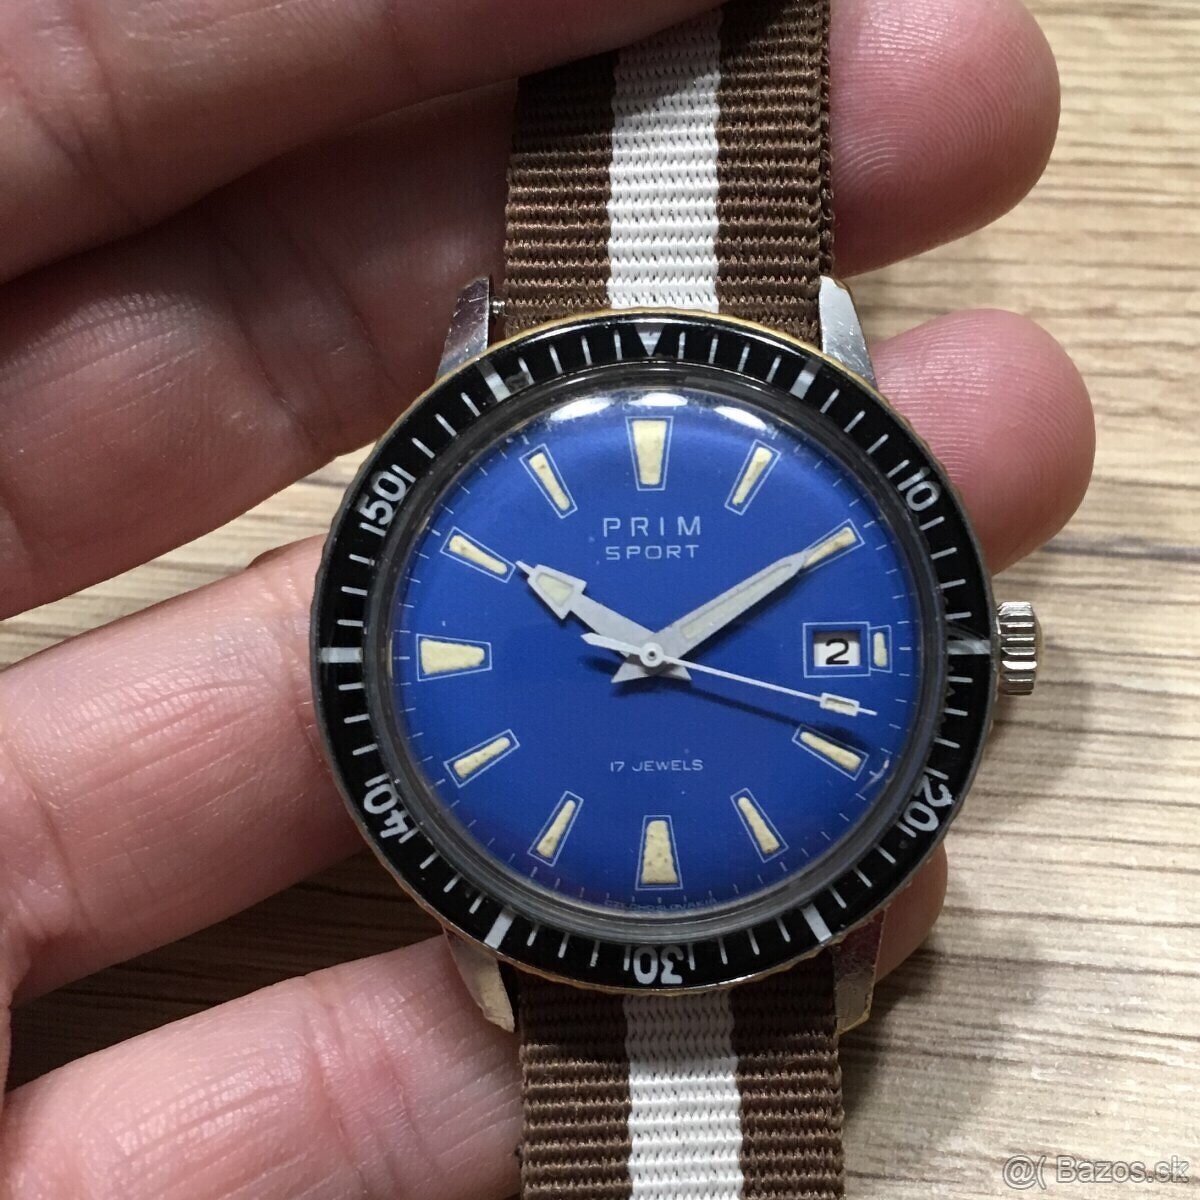 Originál hodinky Prim Sport 1 modré